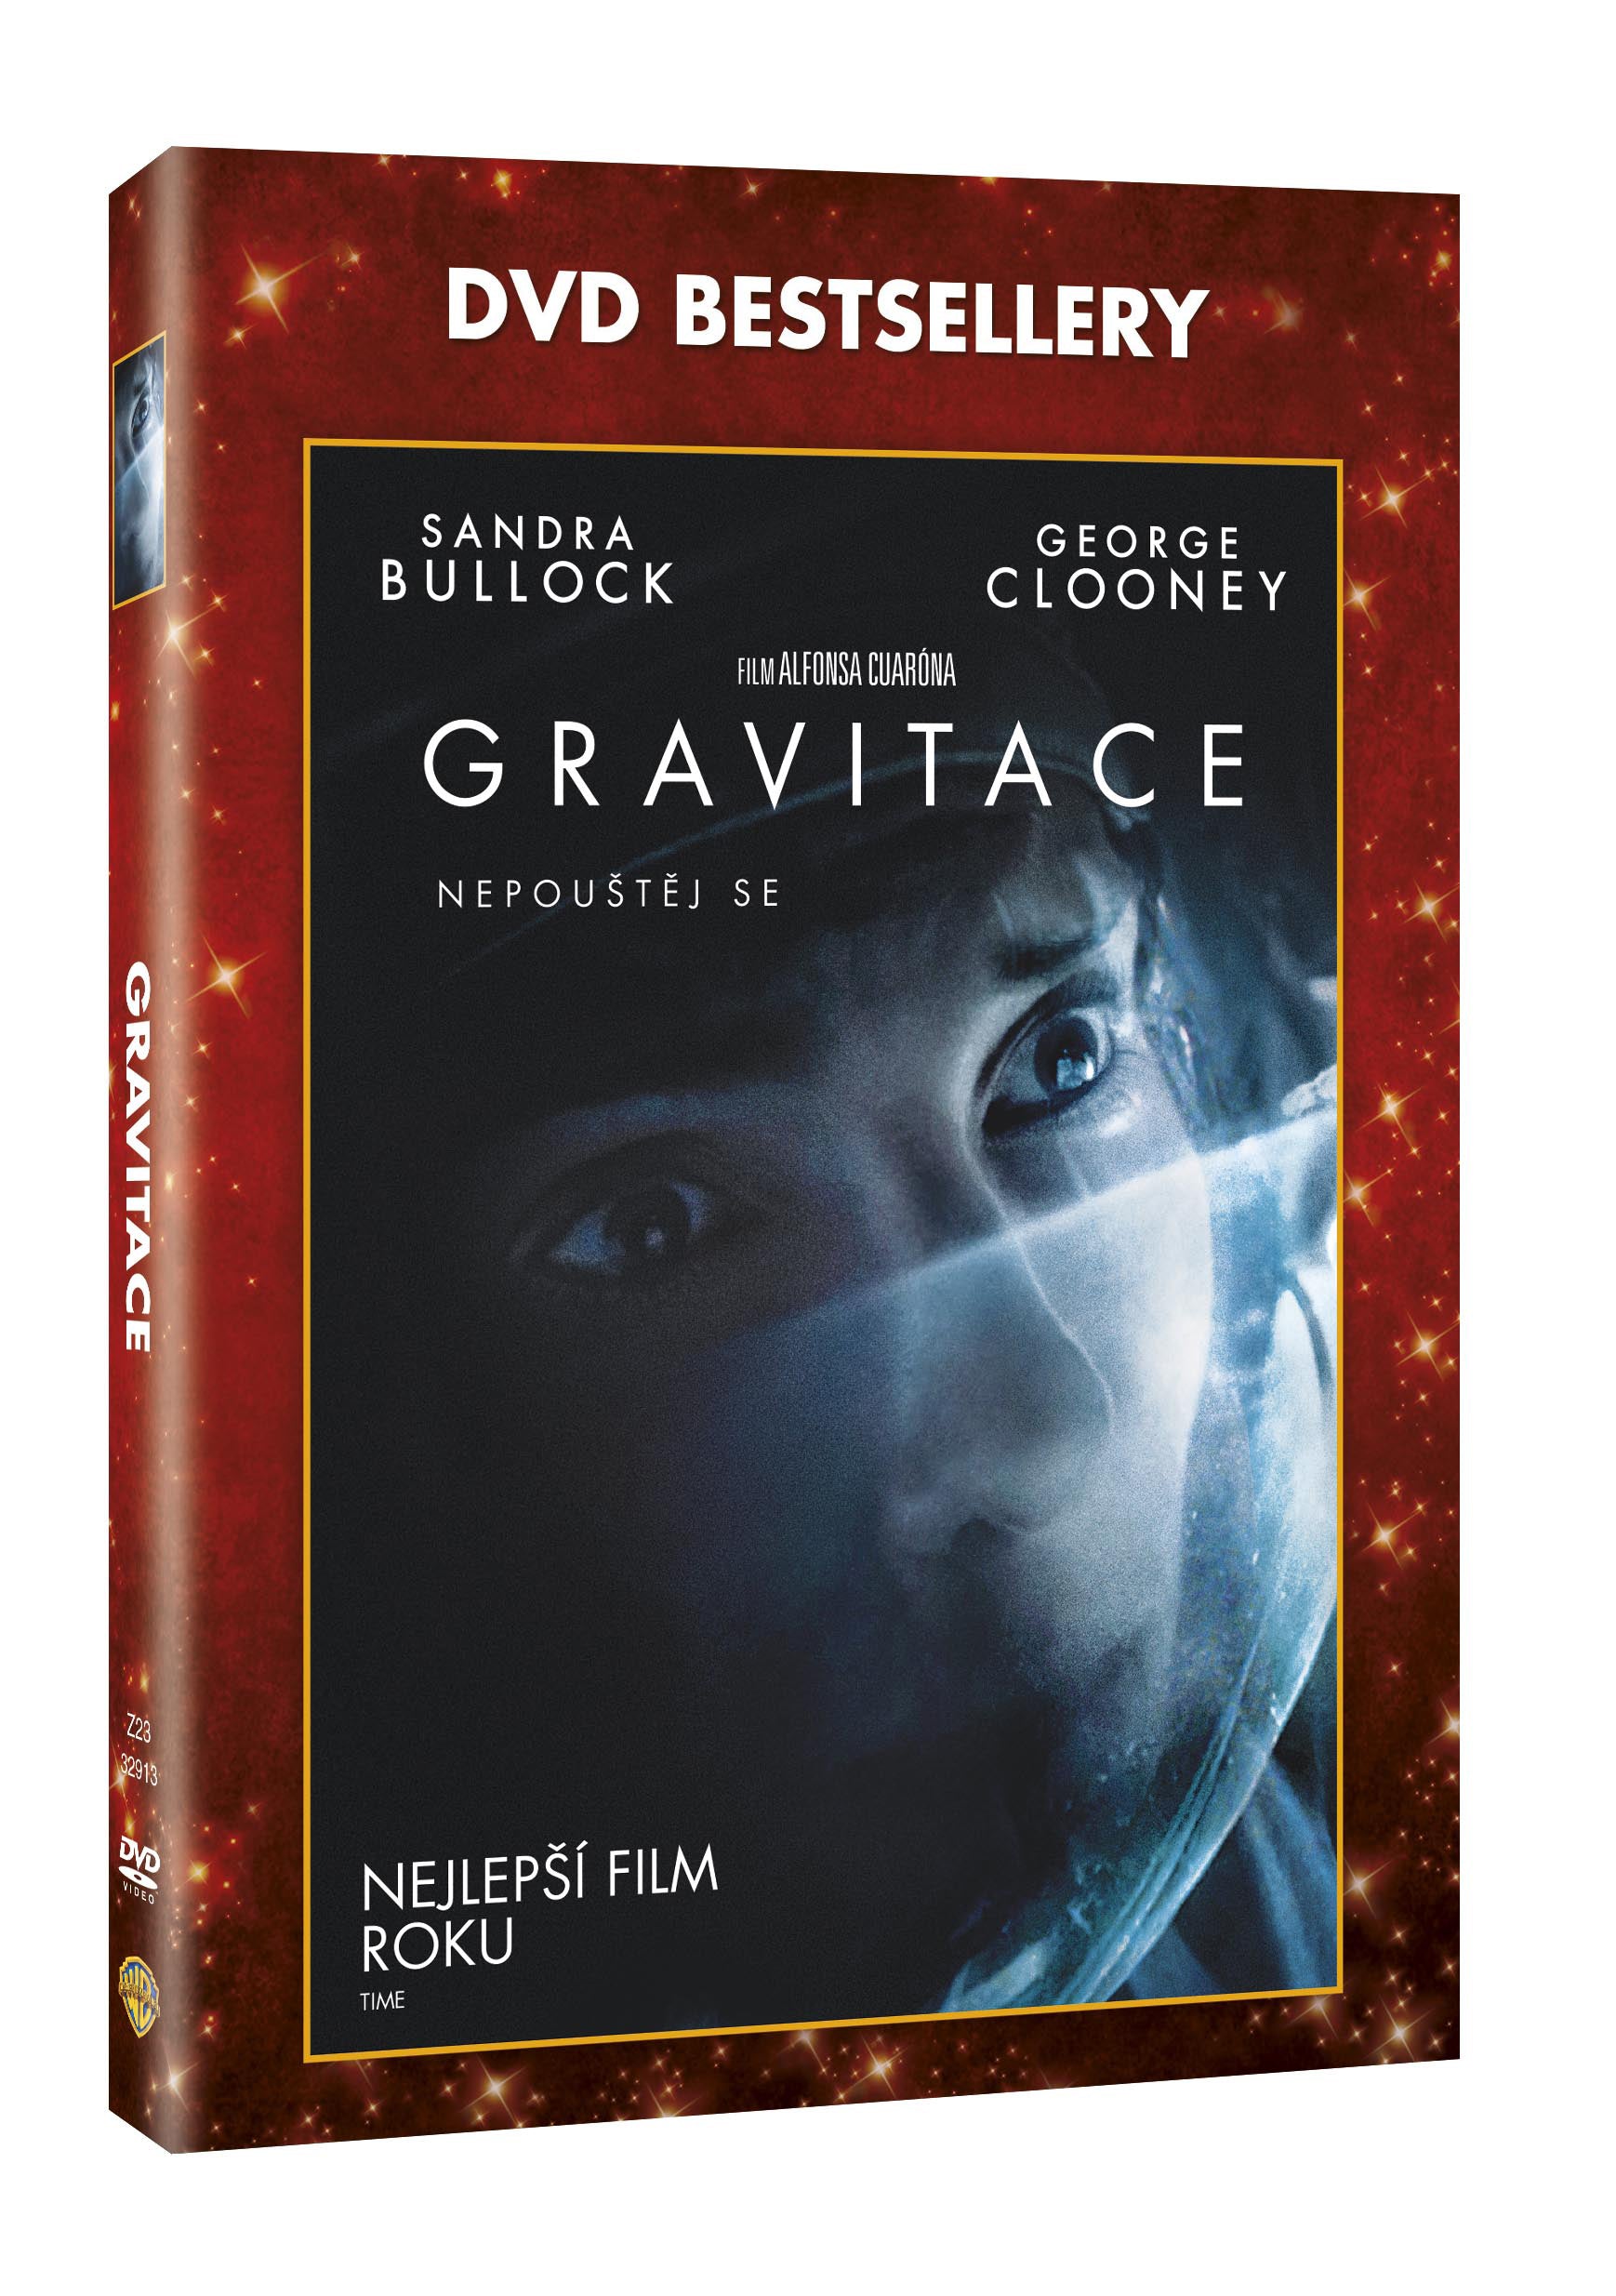 Gravitace - Edice Dvd Bestsellery (Gravity)